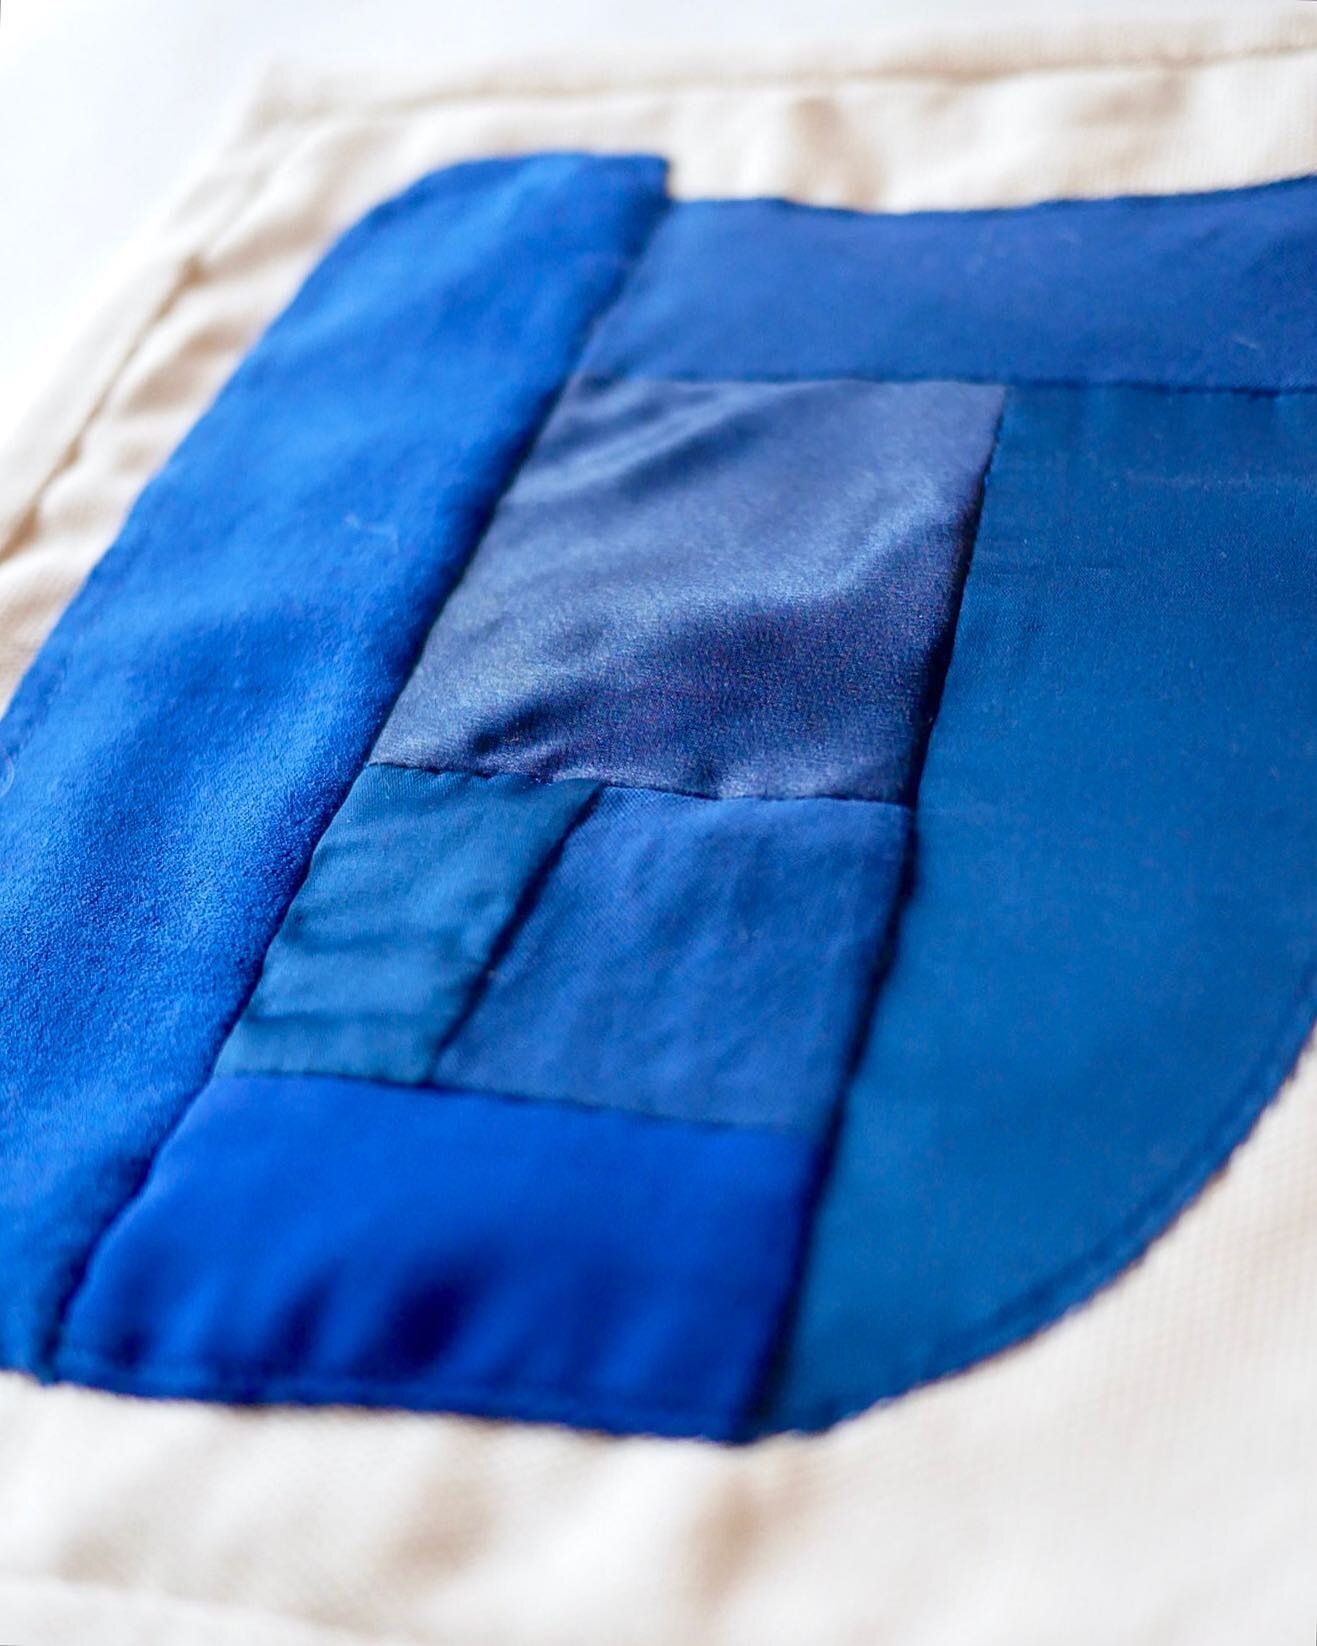 Ultramarin/Suupernova (detail) 💙🌊🦋 Quilted cotton, polyester and silk

softgalleri.no/butikk
.
.
.
.
.
.
.
.
.

#patchwork #patchworkquilt #textileart #textilecollage #collageartists #bluets #composition #abstractart #contemporarytextileart